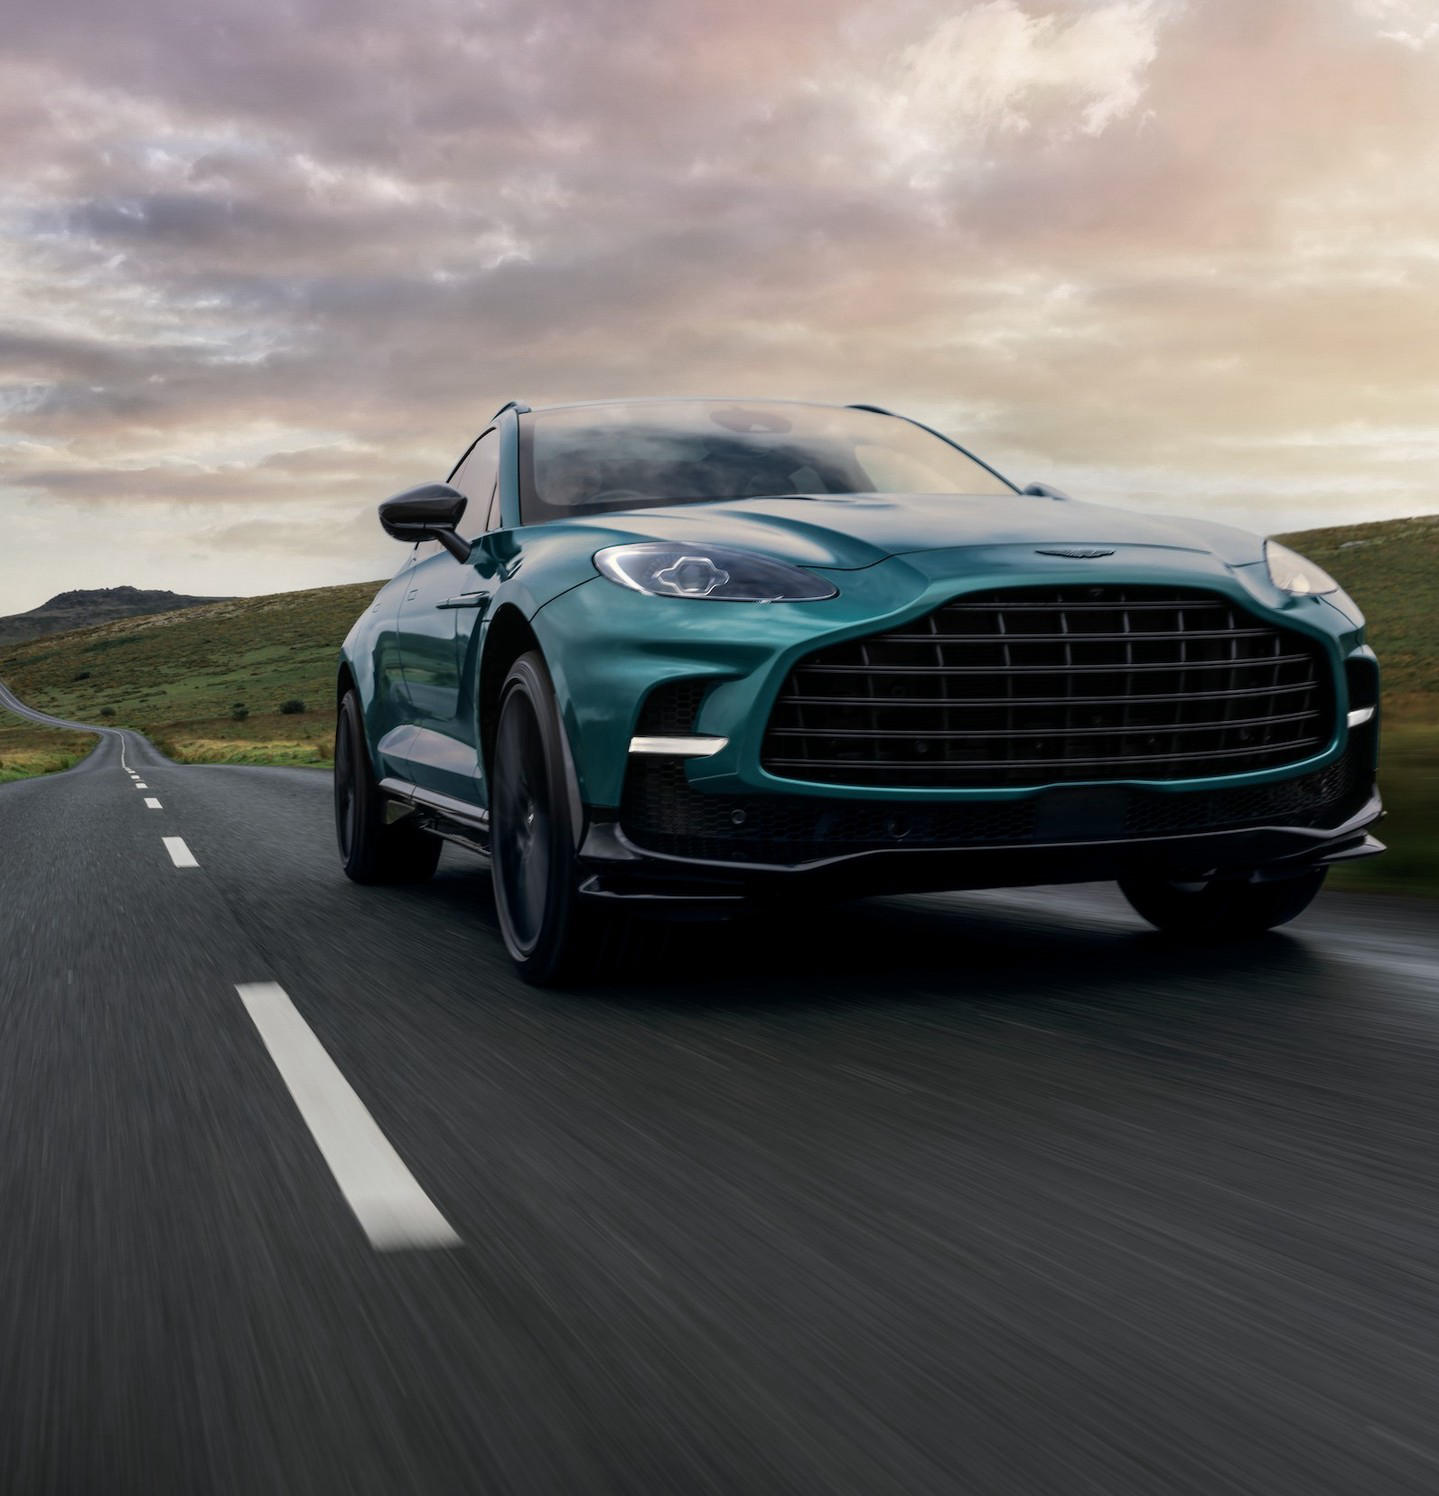 Aston Martin - Powerful performer